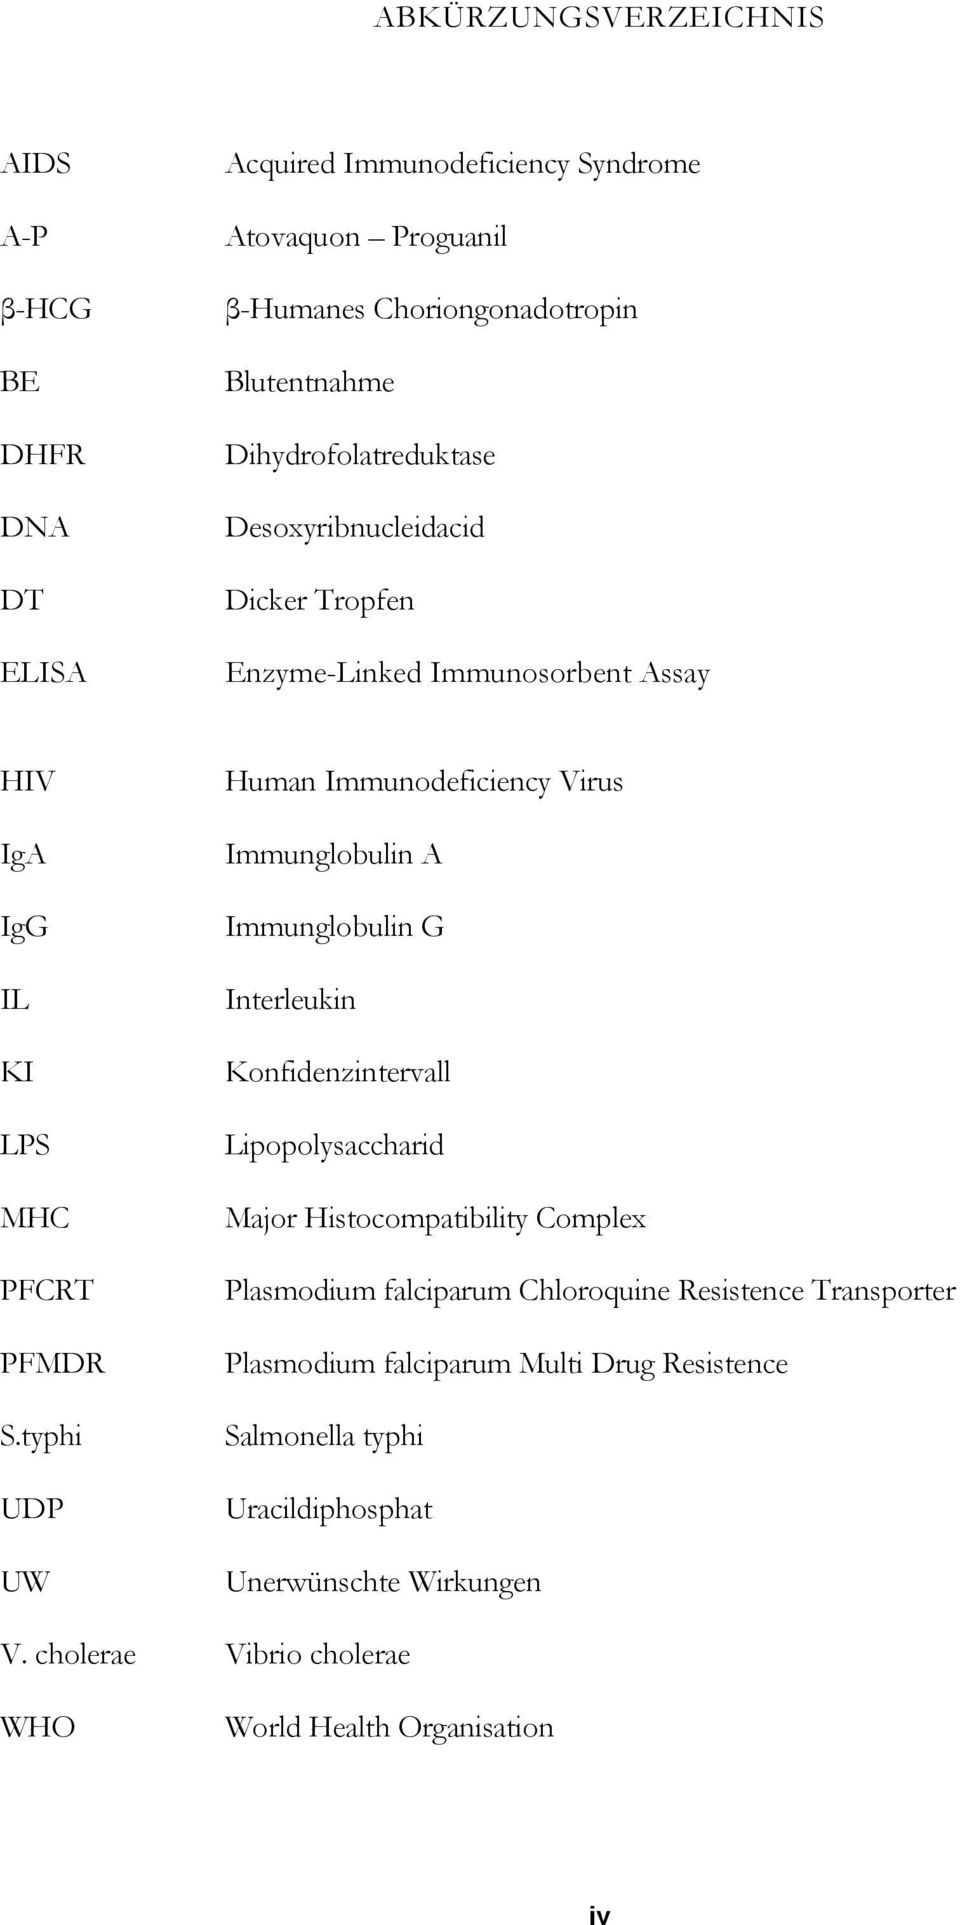 typhi UDP UW Human Immunodeficiency Virus Immunglobulin A Immunglobulin G Interleukin Konfidenzintervall Lipopolysaccharid Major Histocompatibility Complex